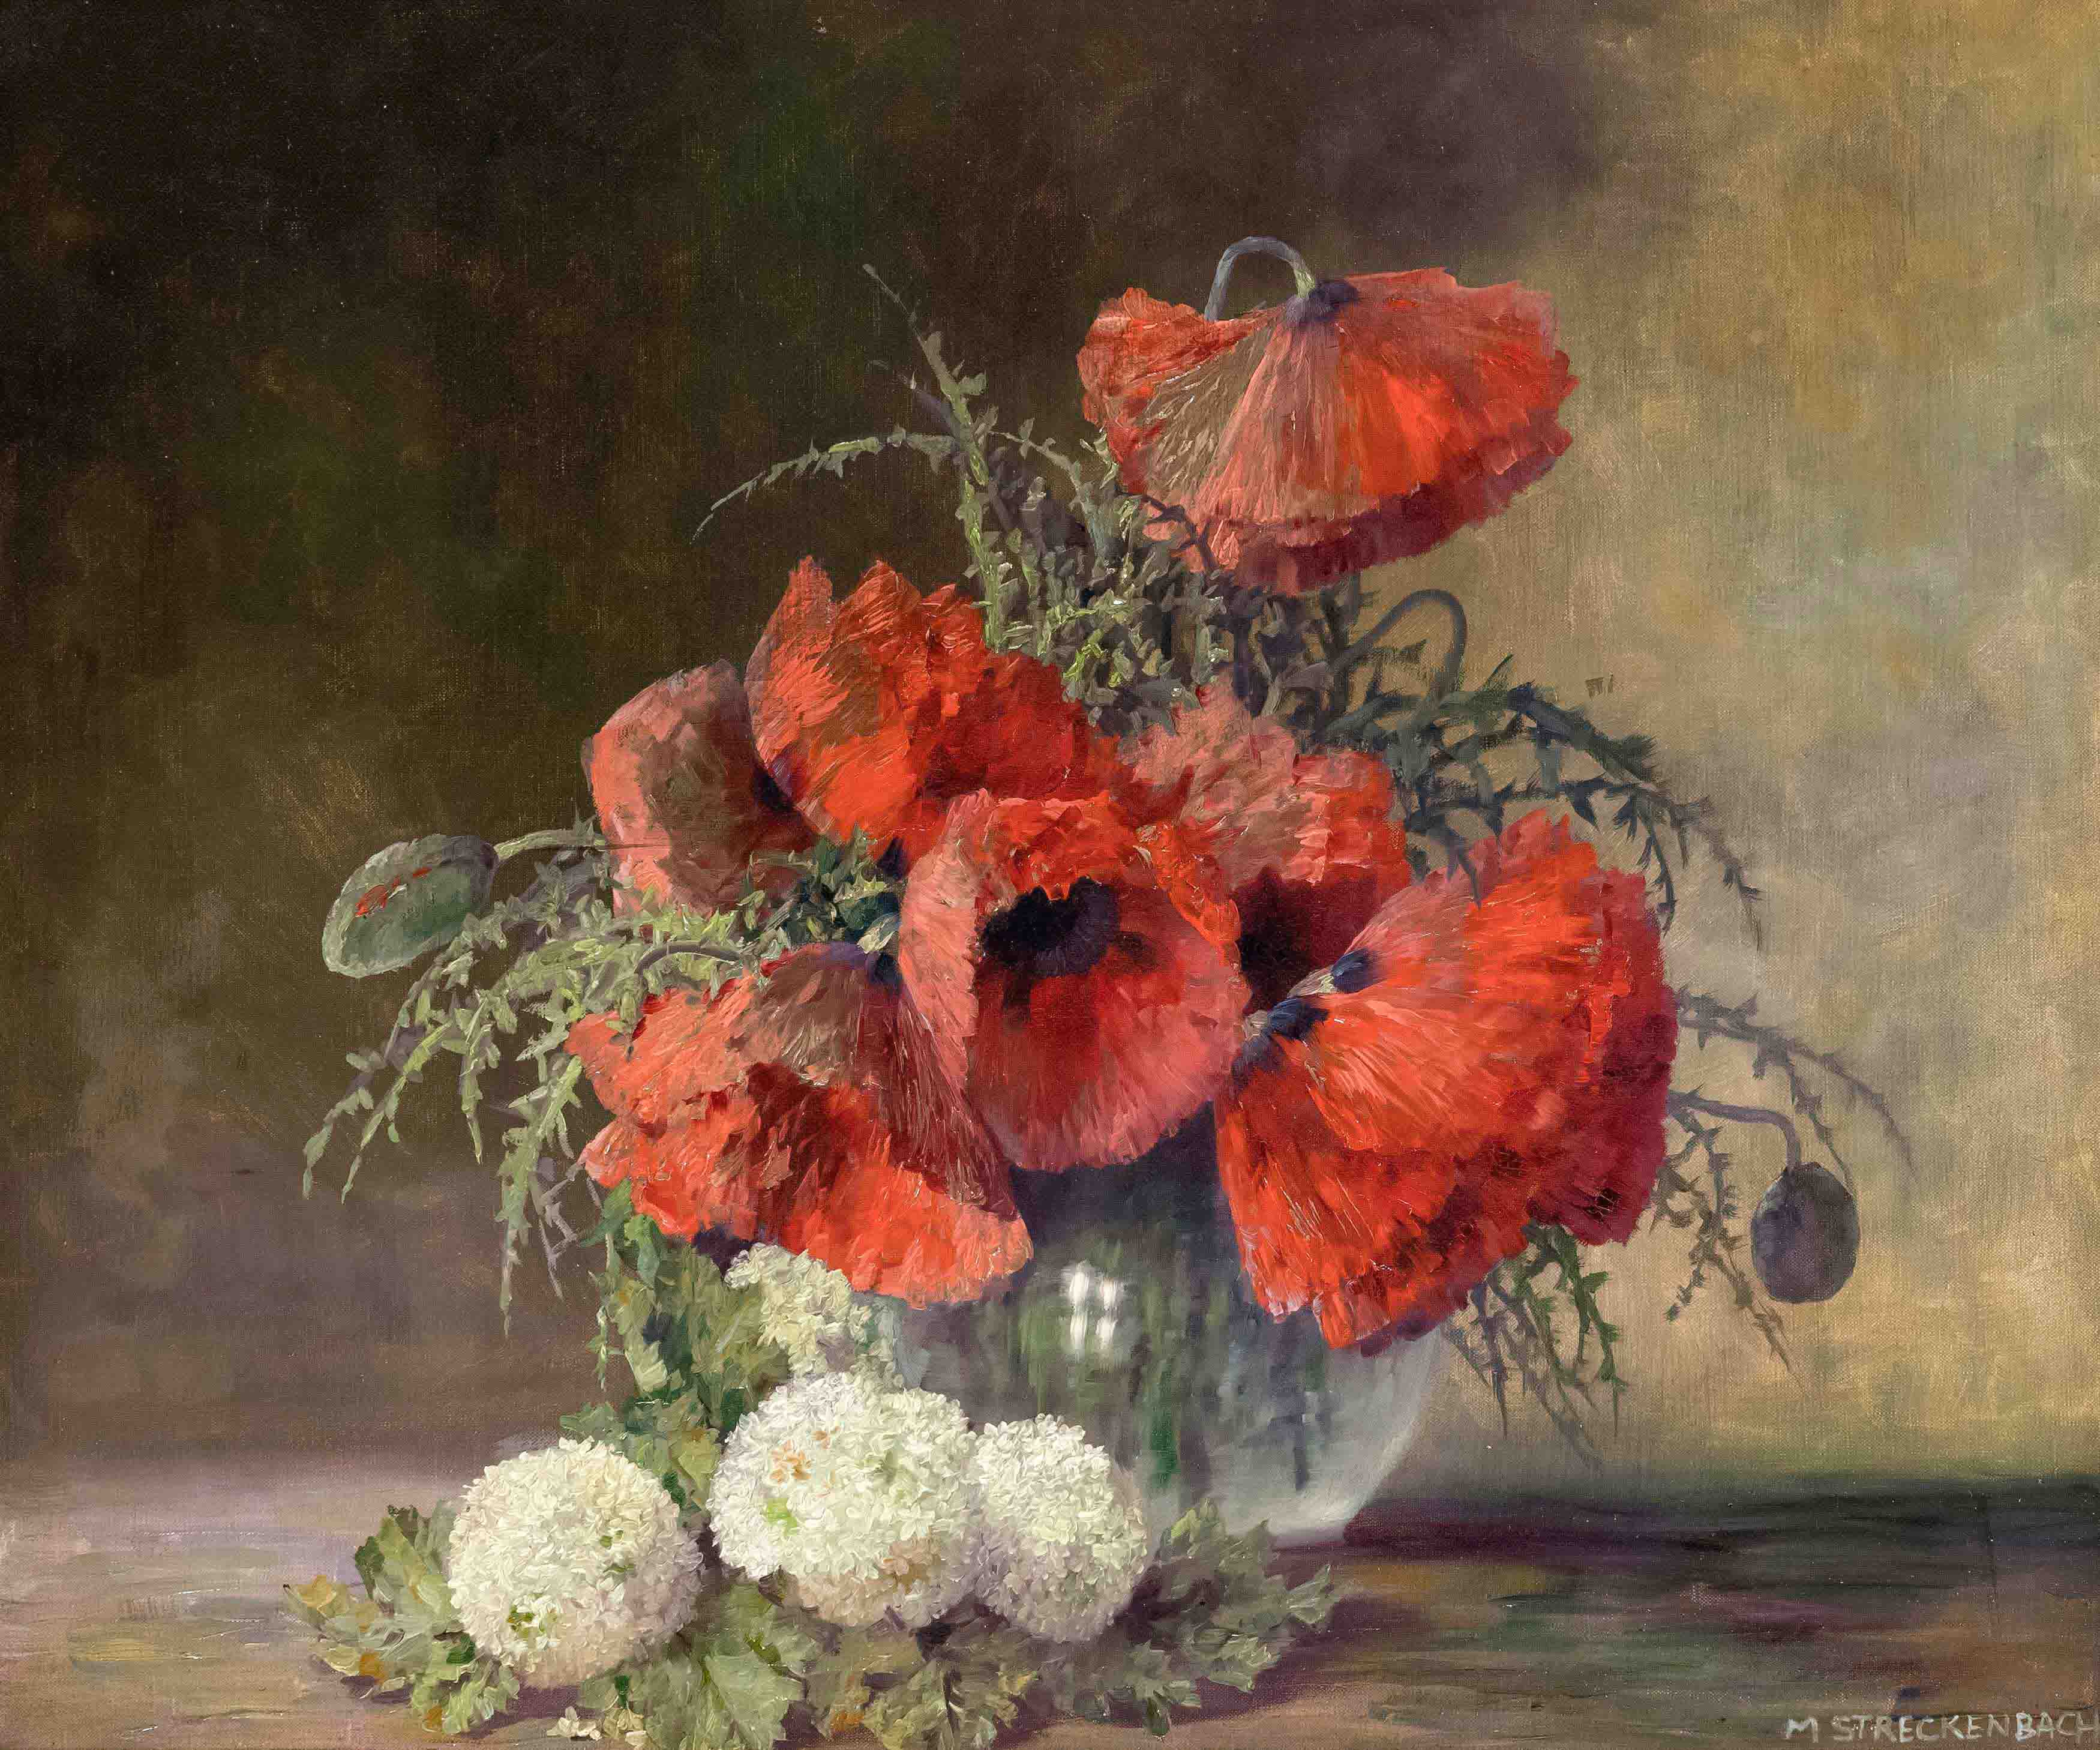 Streckenbach. Max. 1863 - Eckernförde - 1936. Still life with red poppy. Oil/canvas, signed M.